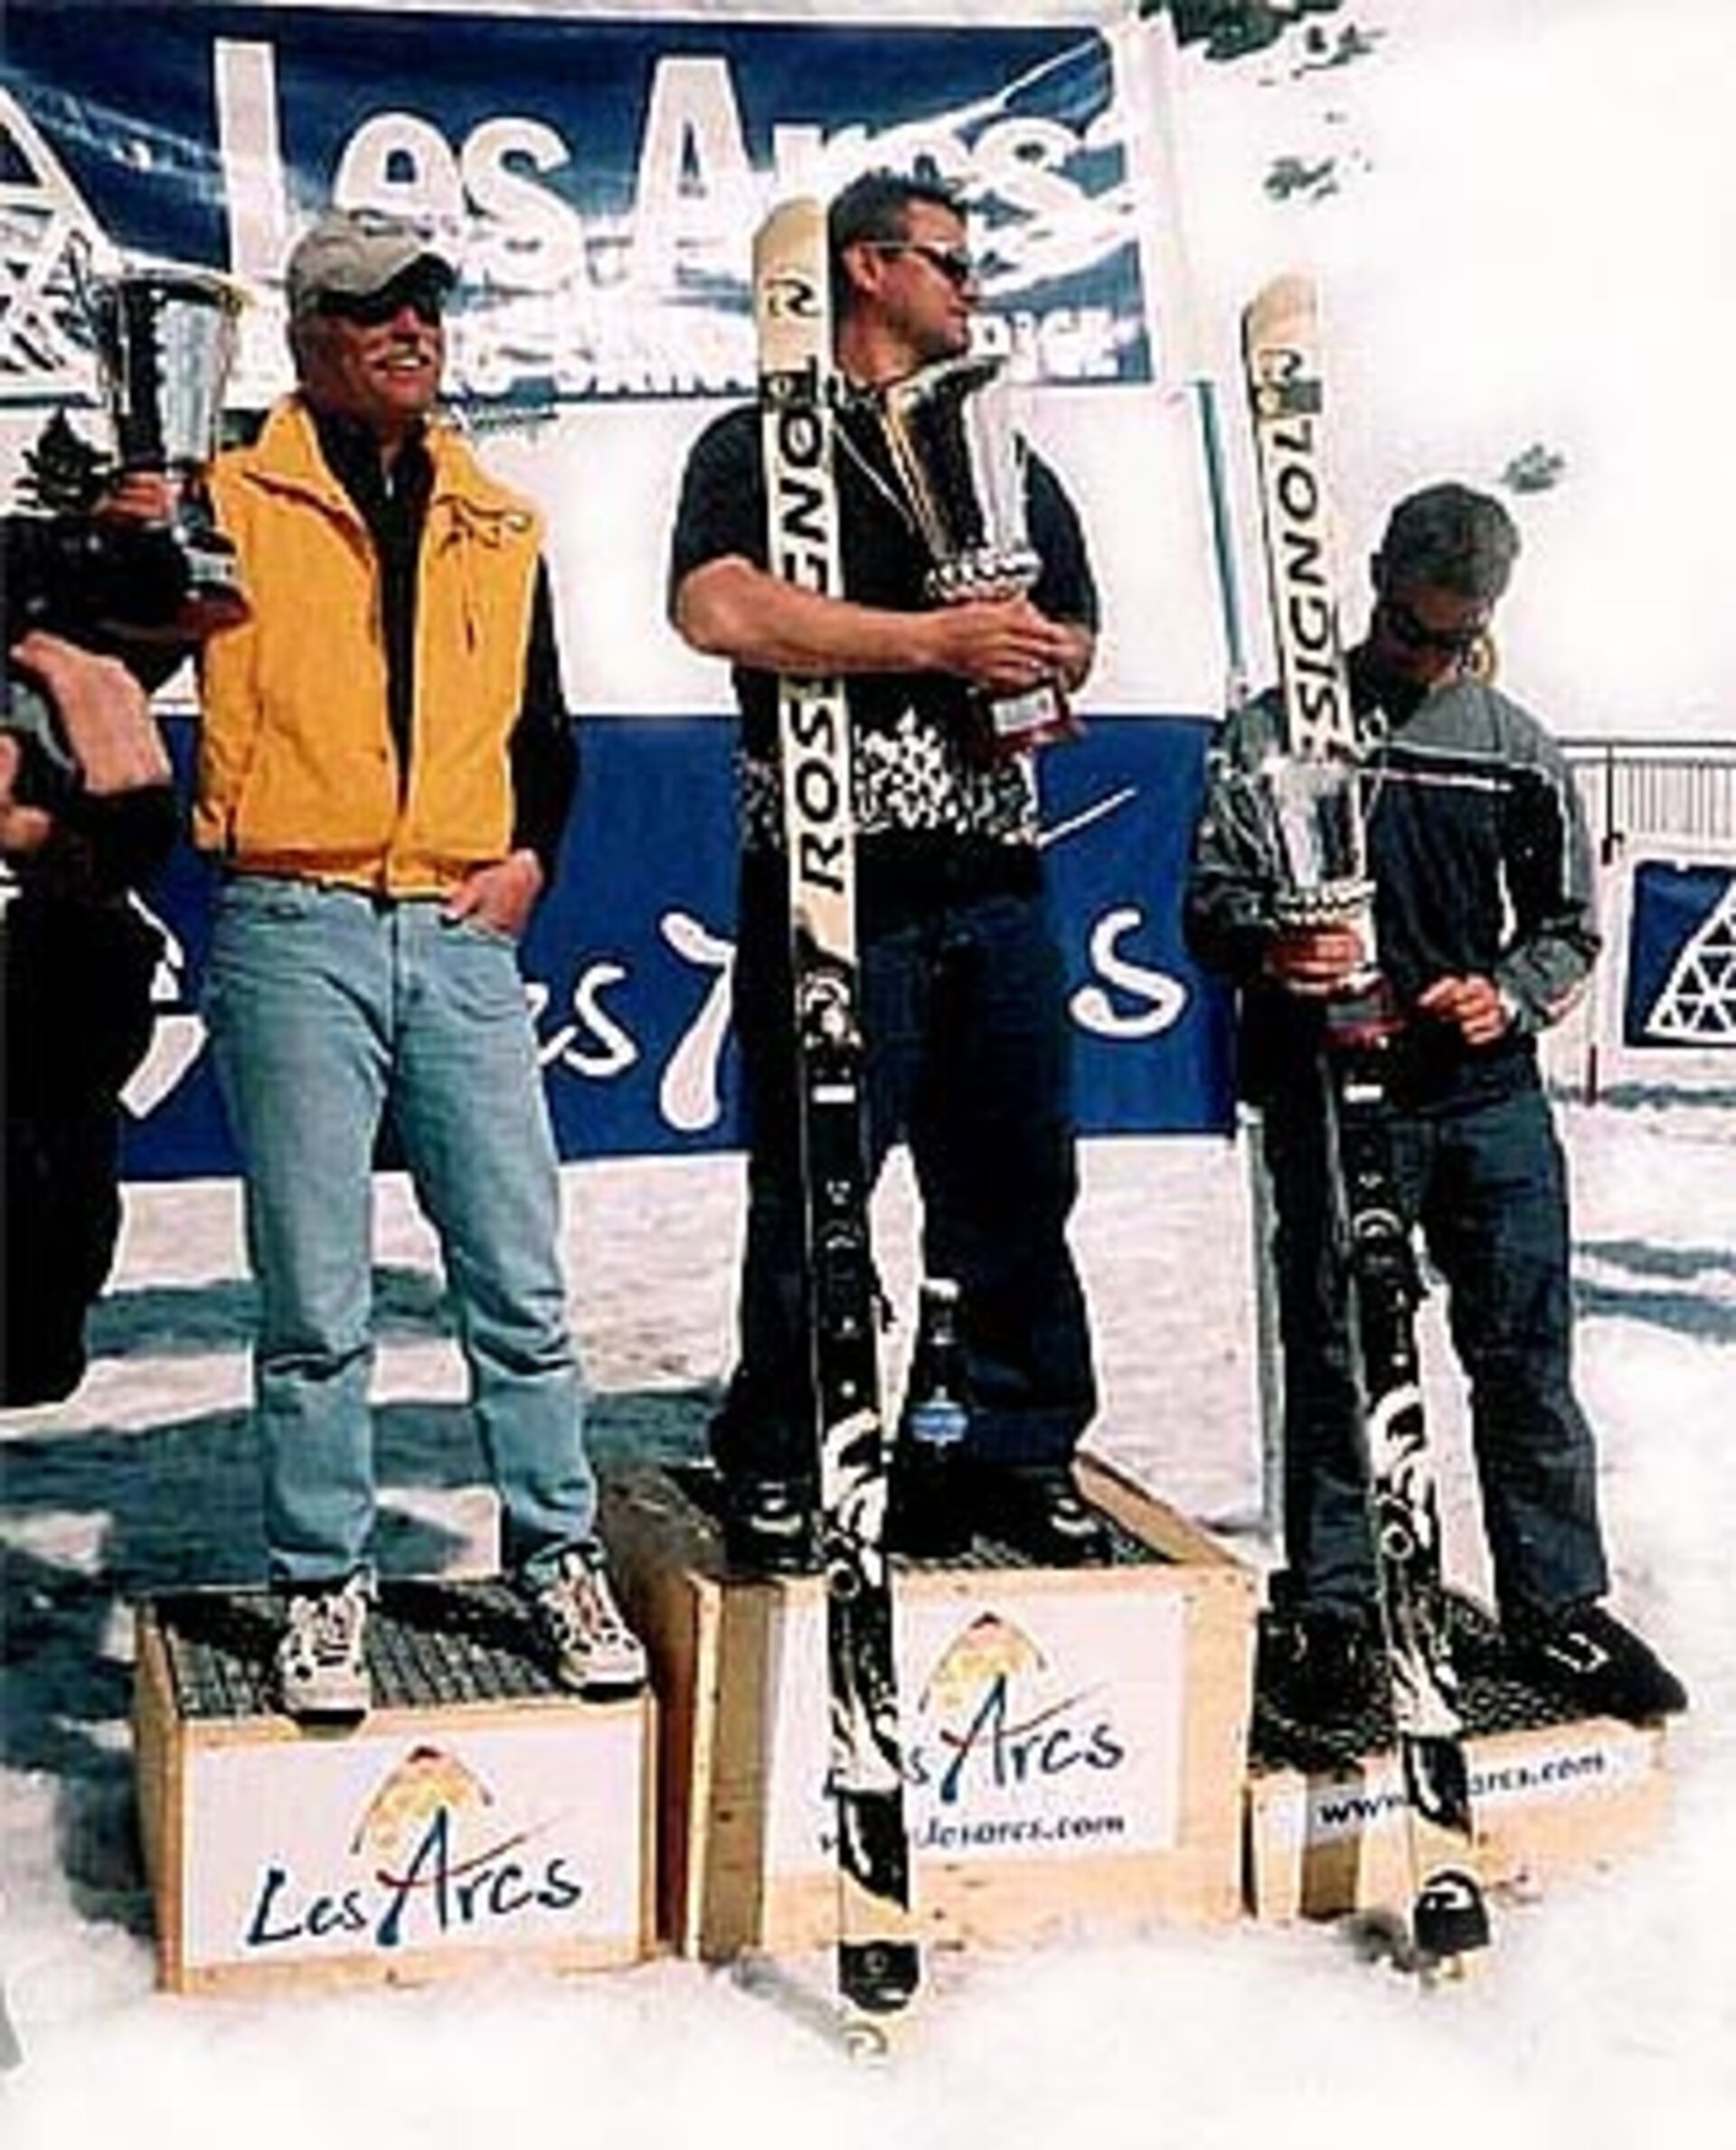 Rossignol’s Martin Lachaud, 2003 Pro Mondial world champion